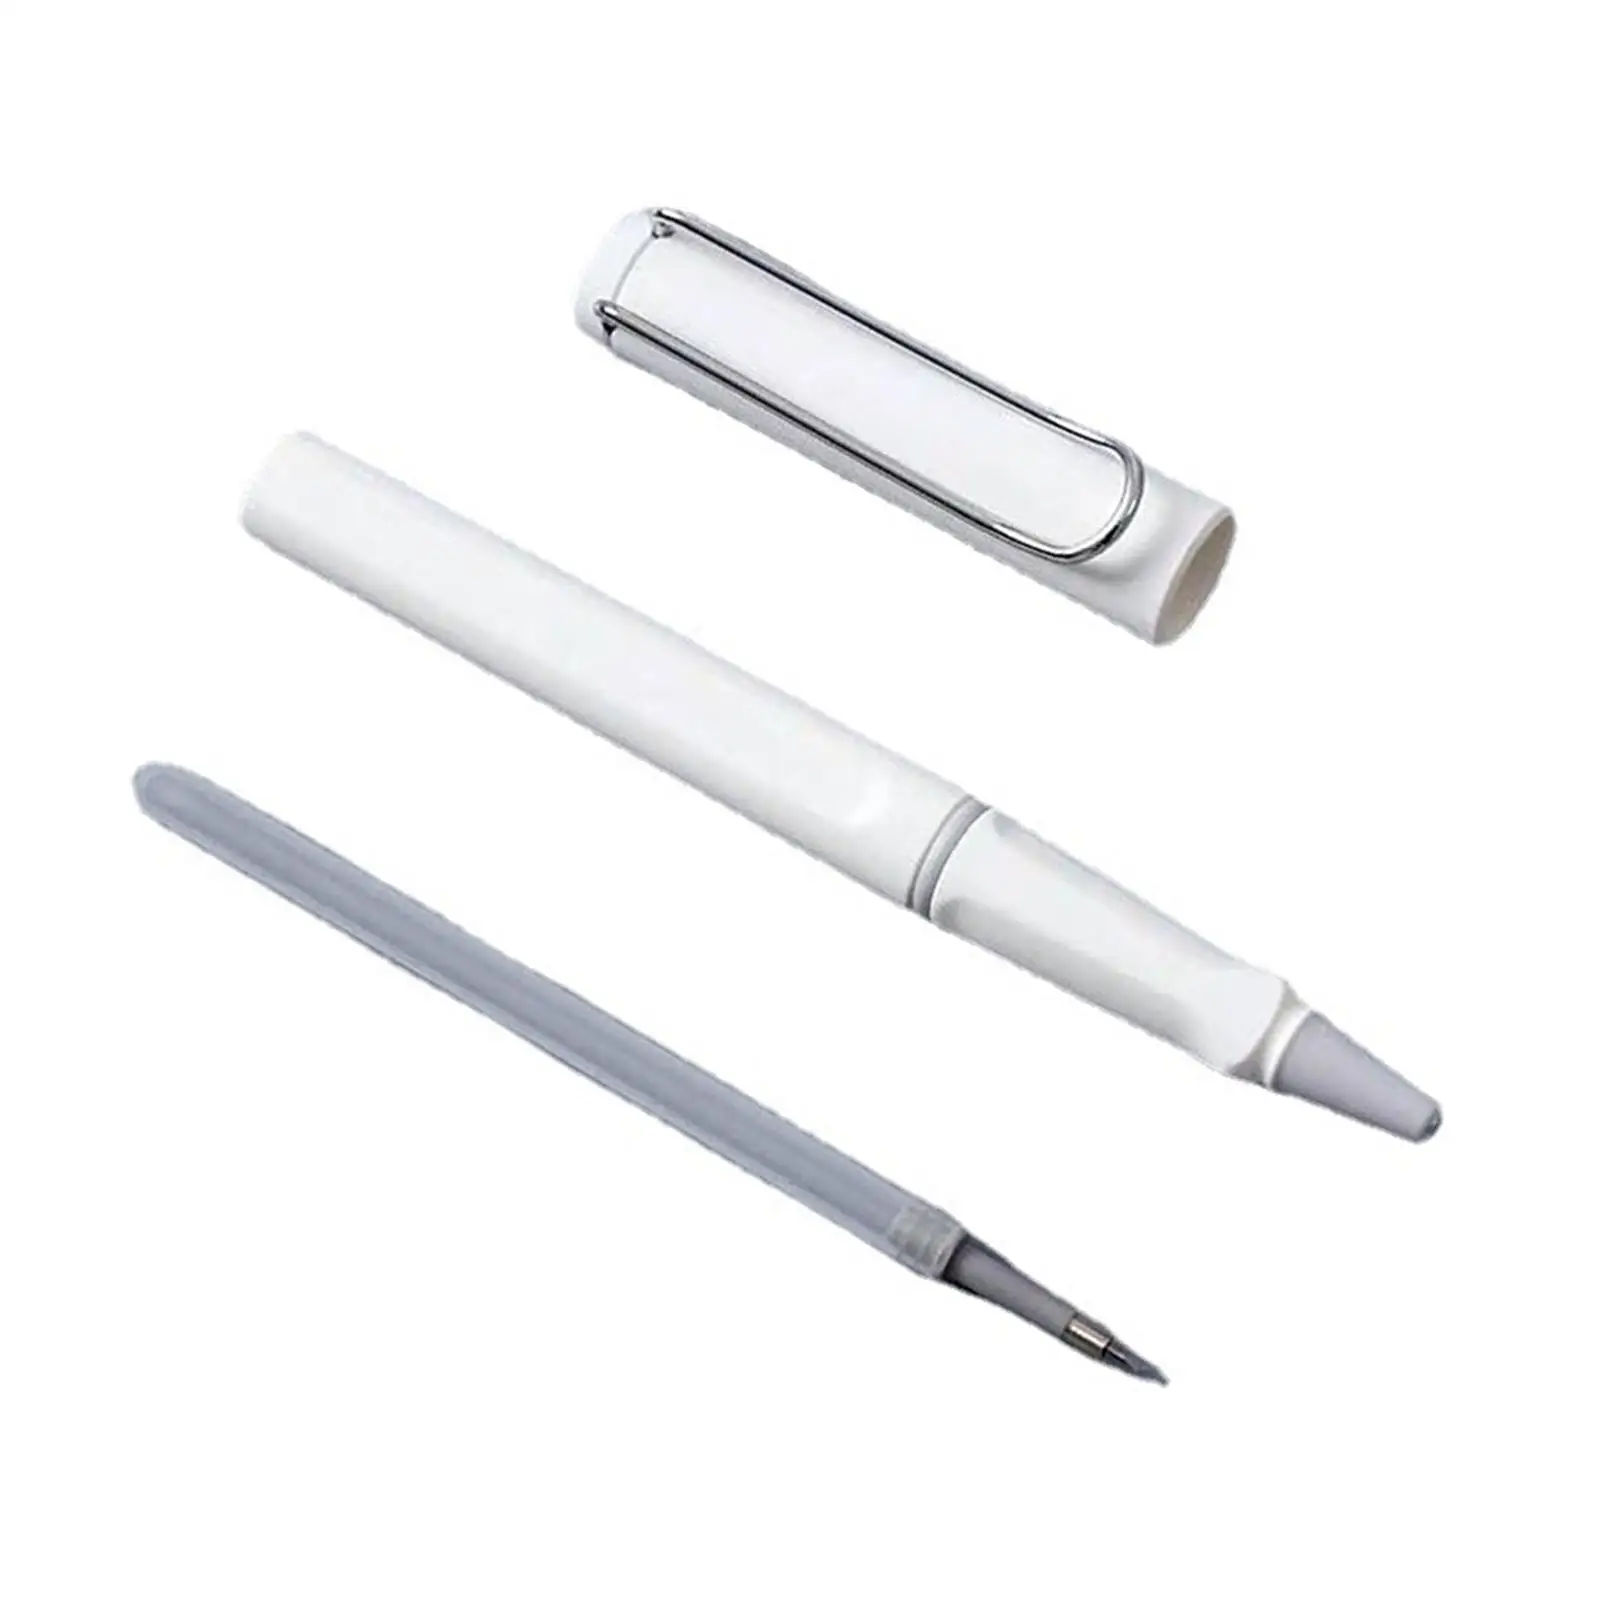 Multifunction Pocket Pen Knife Adjustable Scrapbook Craft Cutting Blade Sticker Making Art Paper Cutter Pen for Carving Office